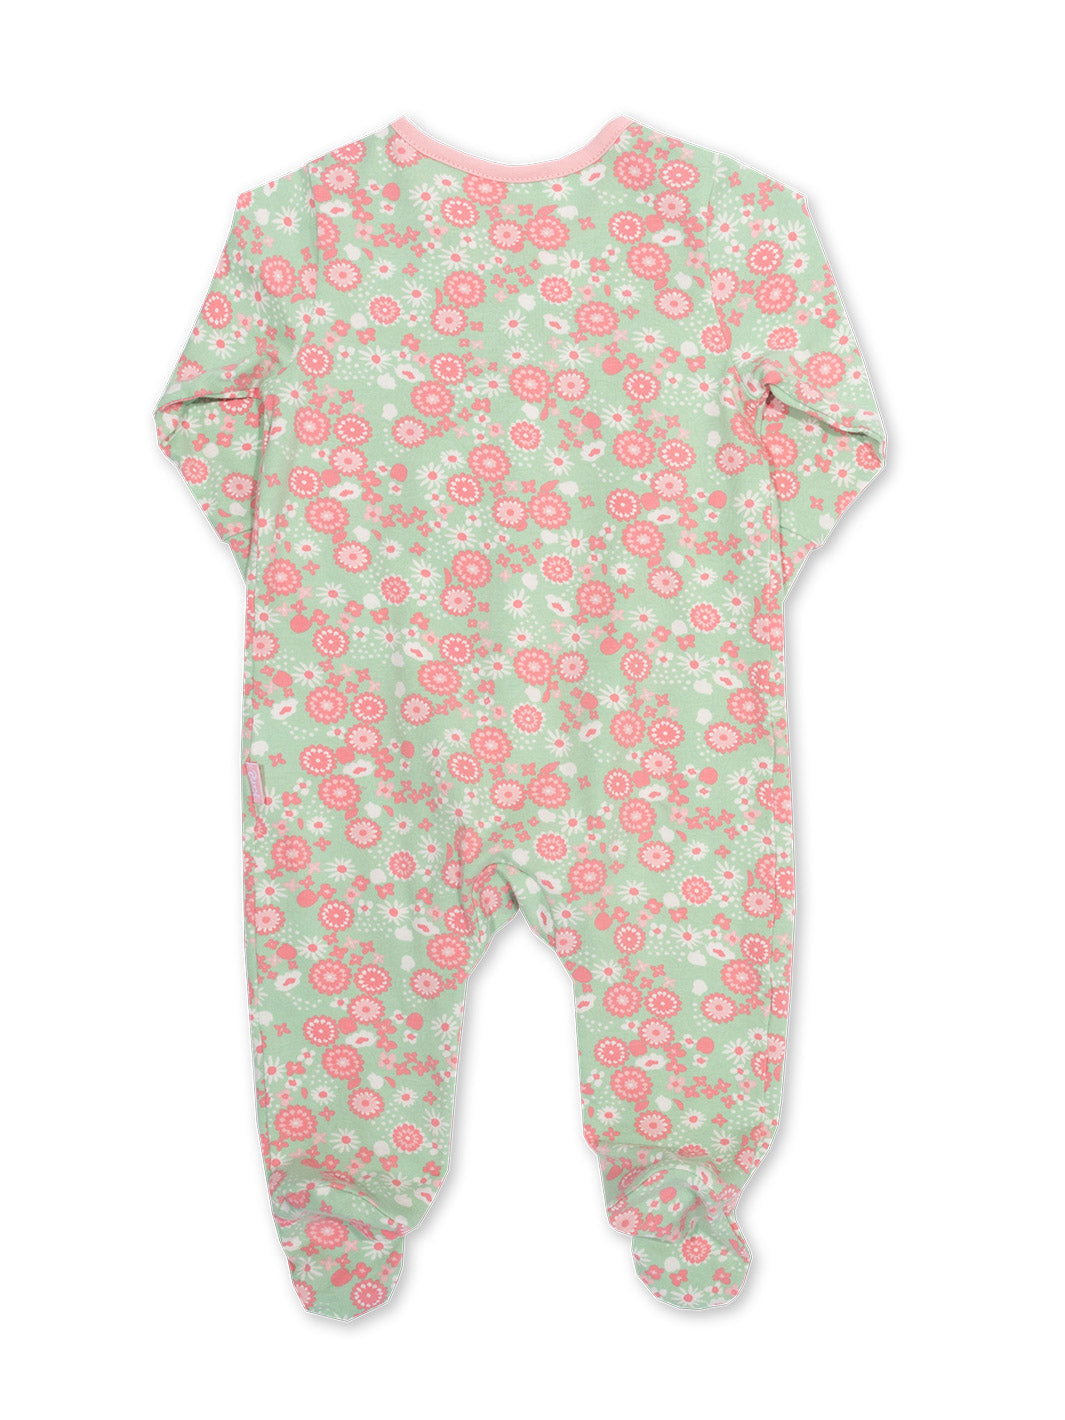 Kite Baby Love Sleepsuit